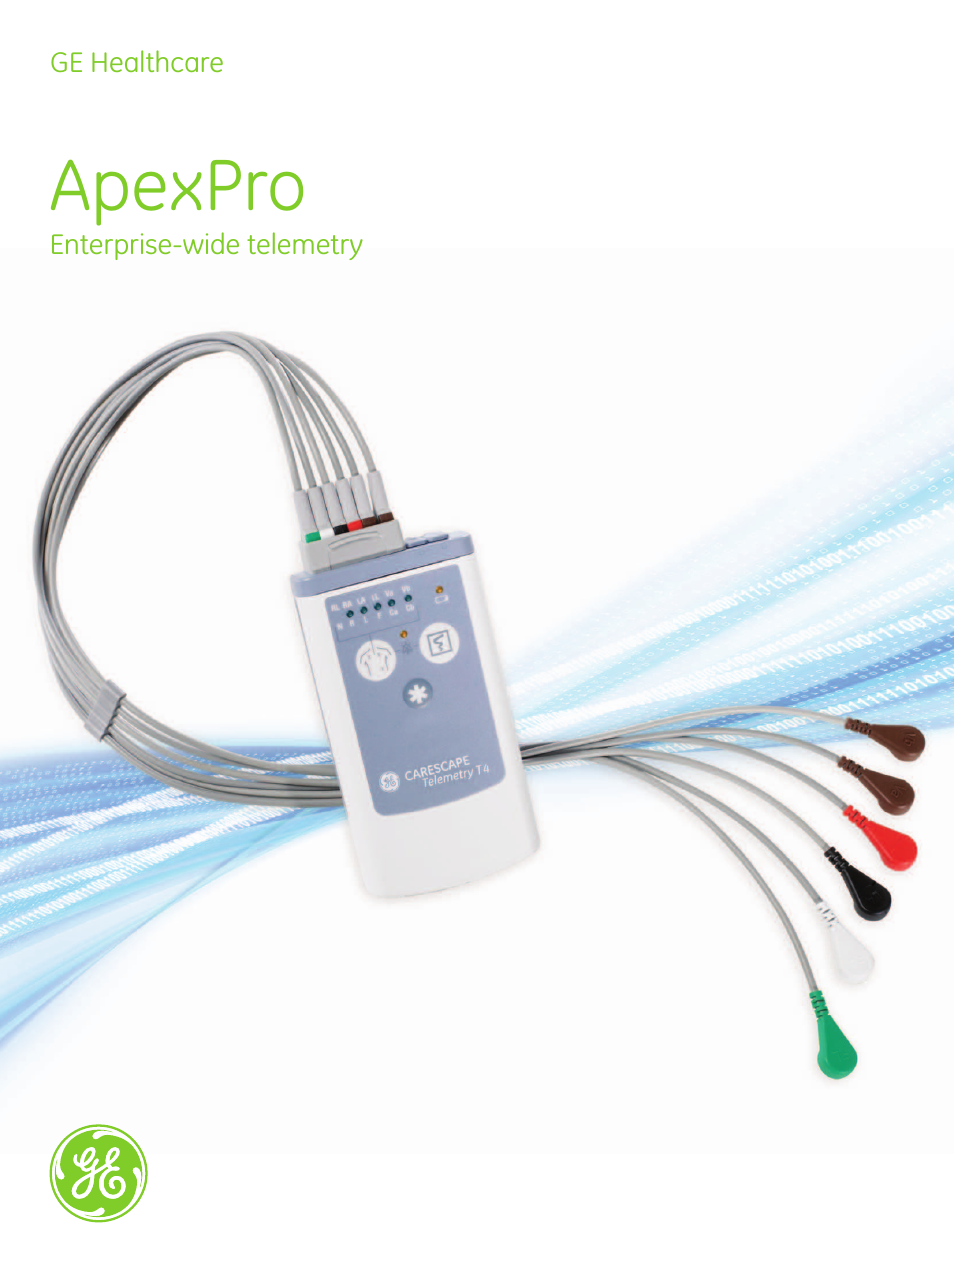 ApexPro Telemetry System